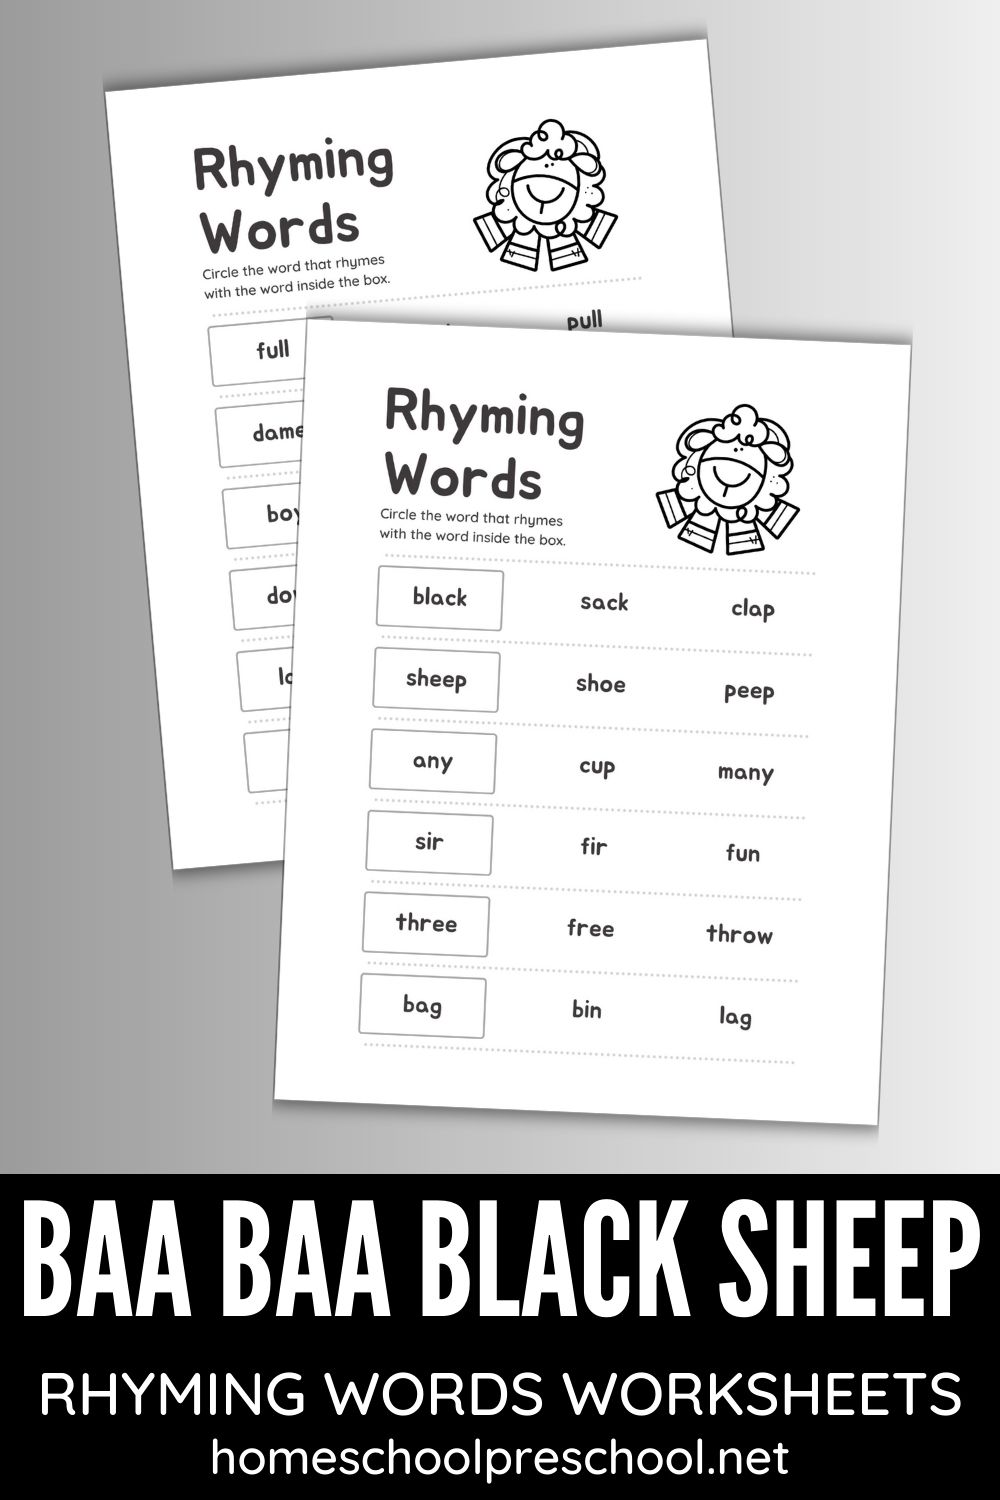 sing-baa-baa-black-sheep Baa Baa Black Sheep Rhyming Words